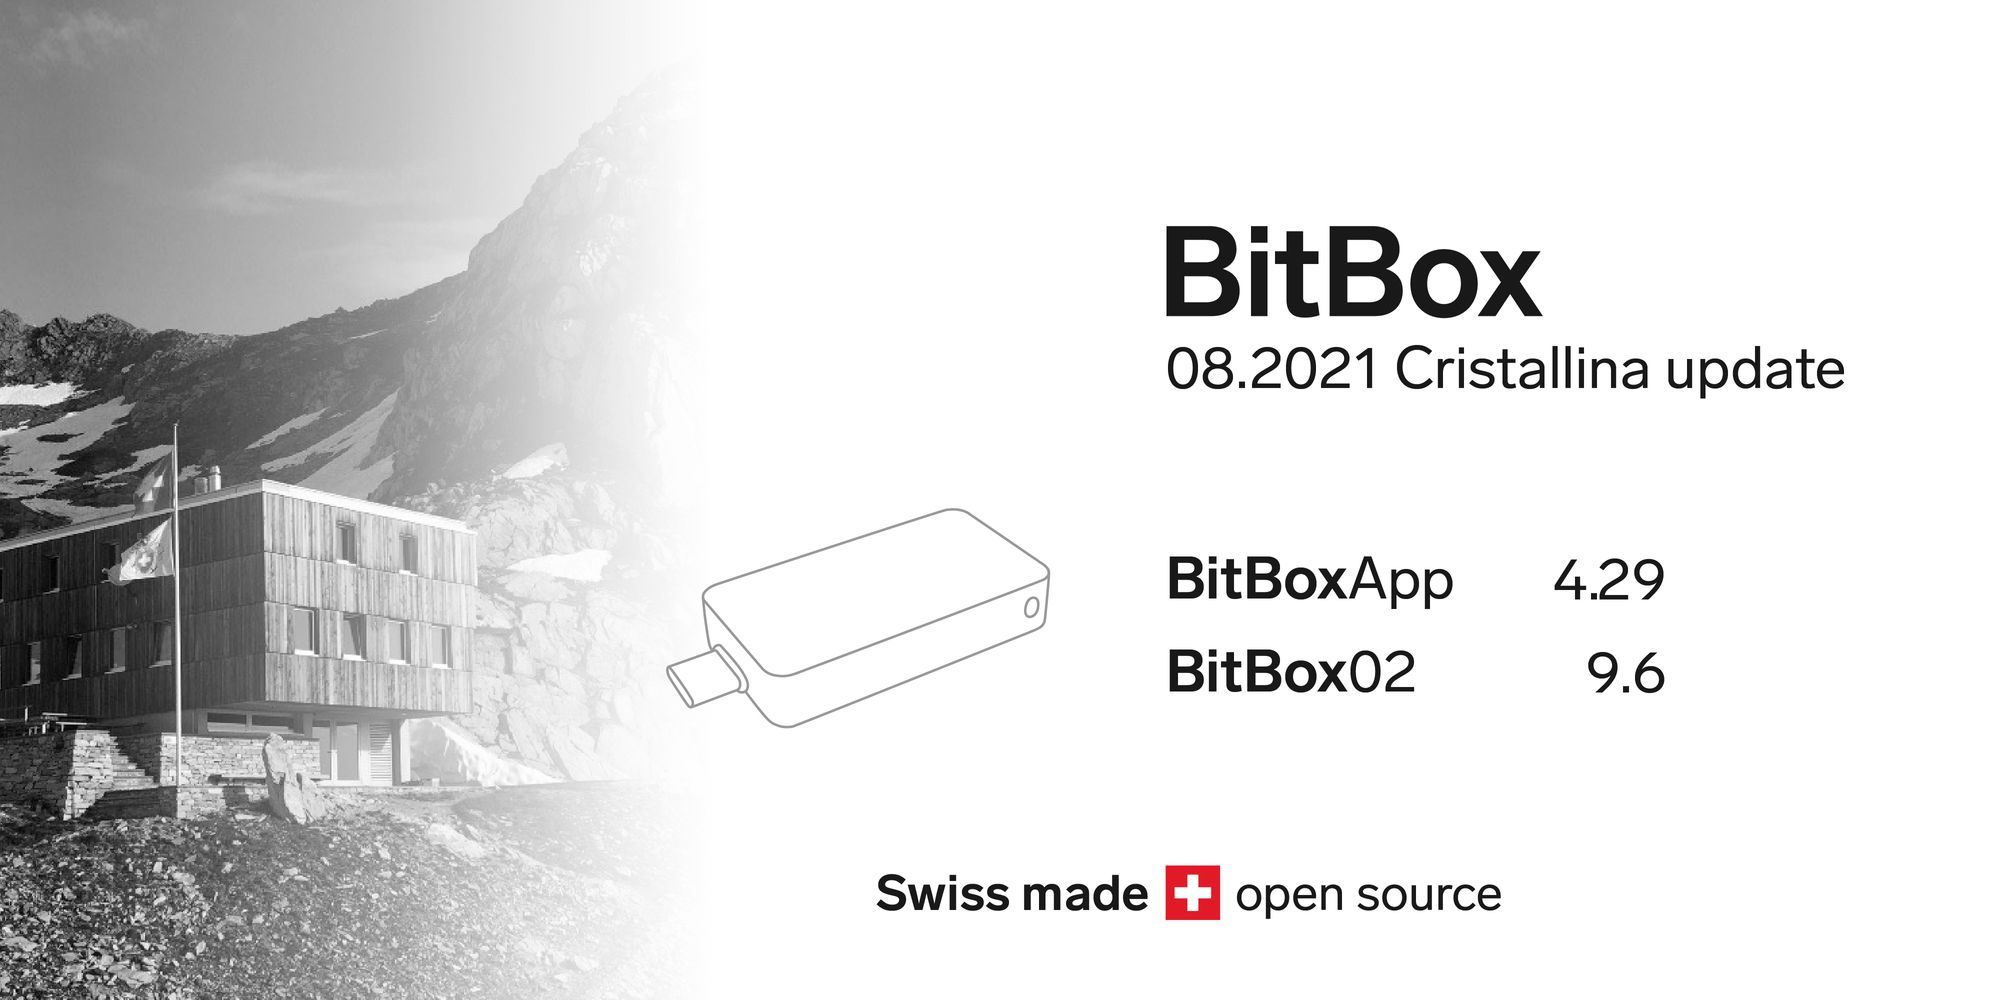 BitBox 08.2021 Cristallina update